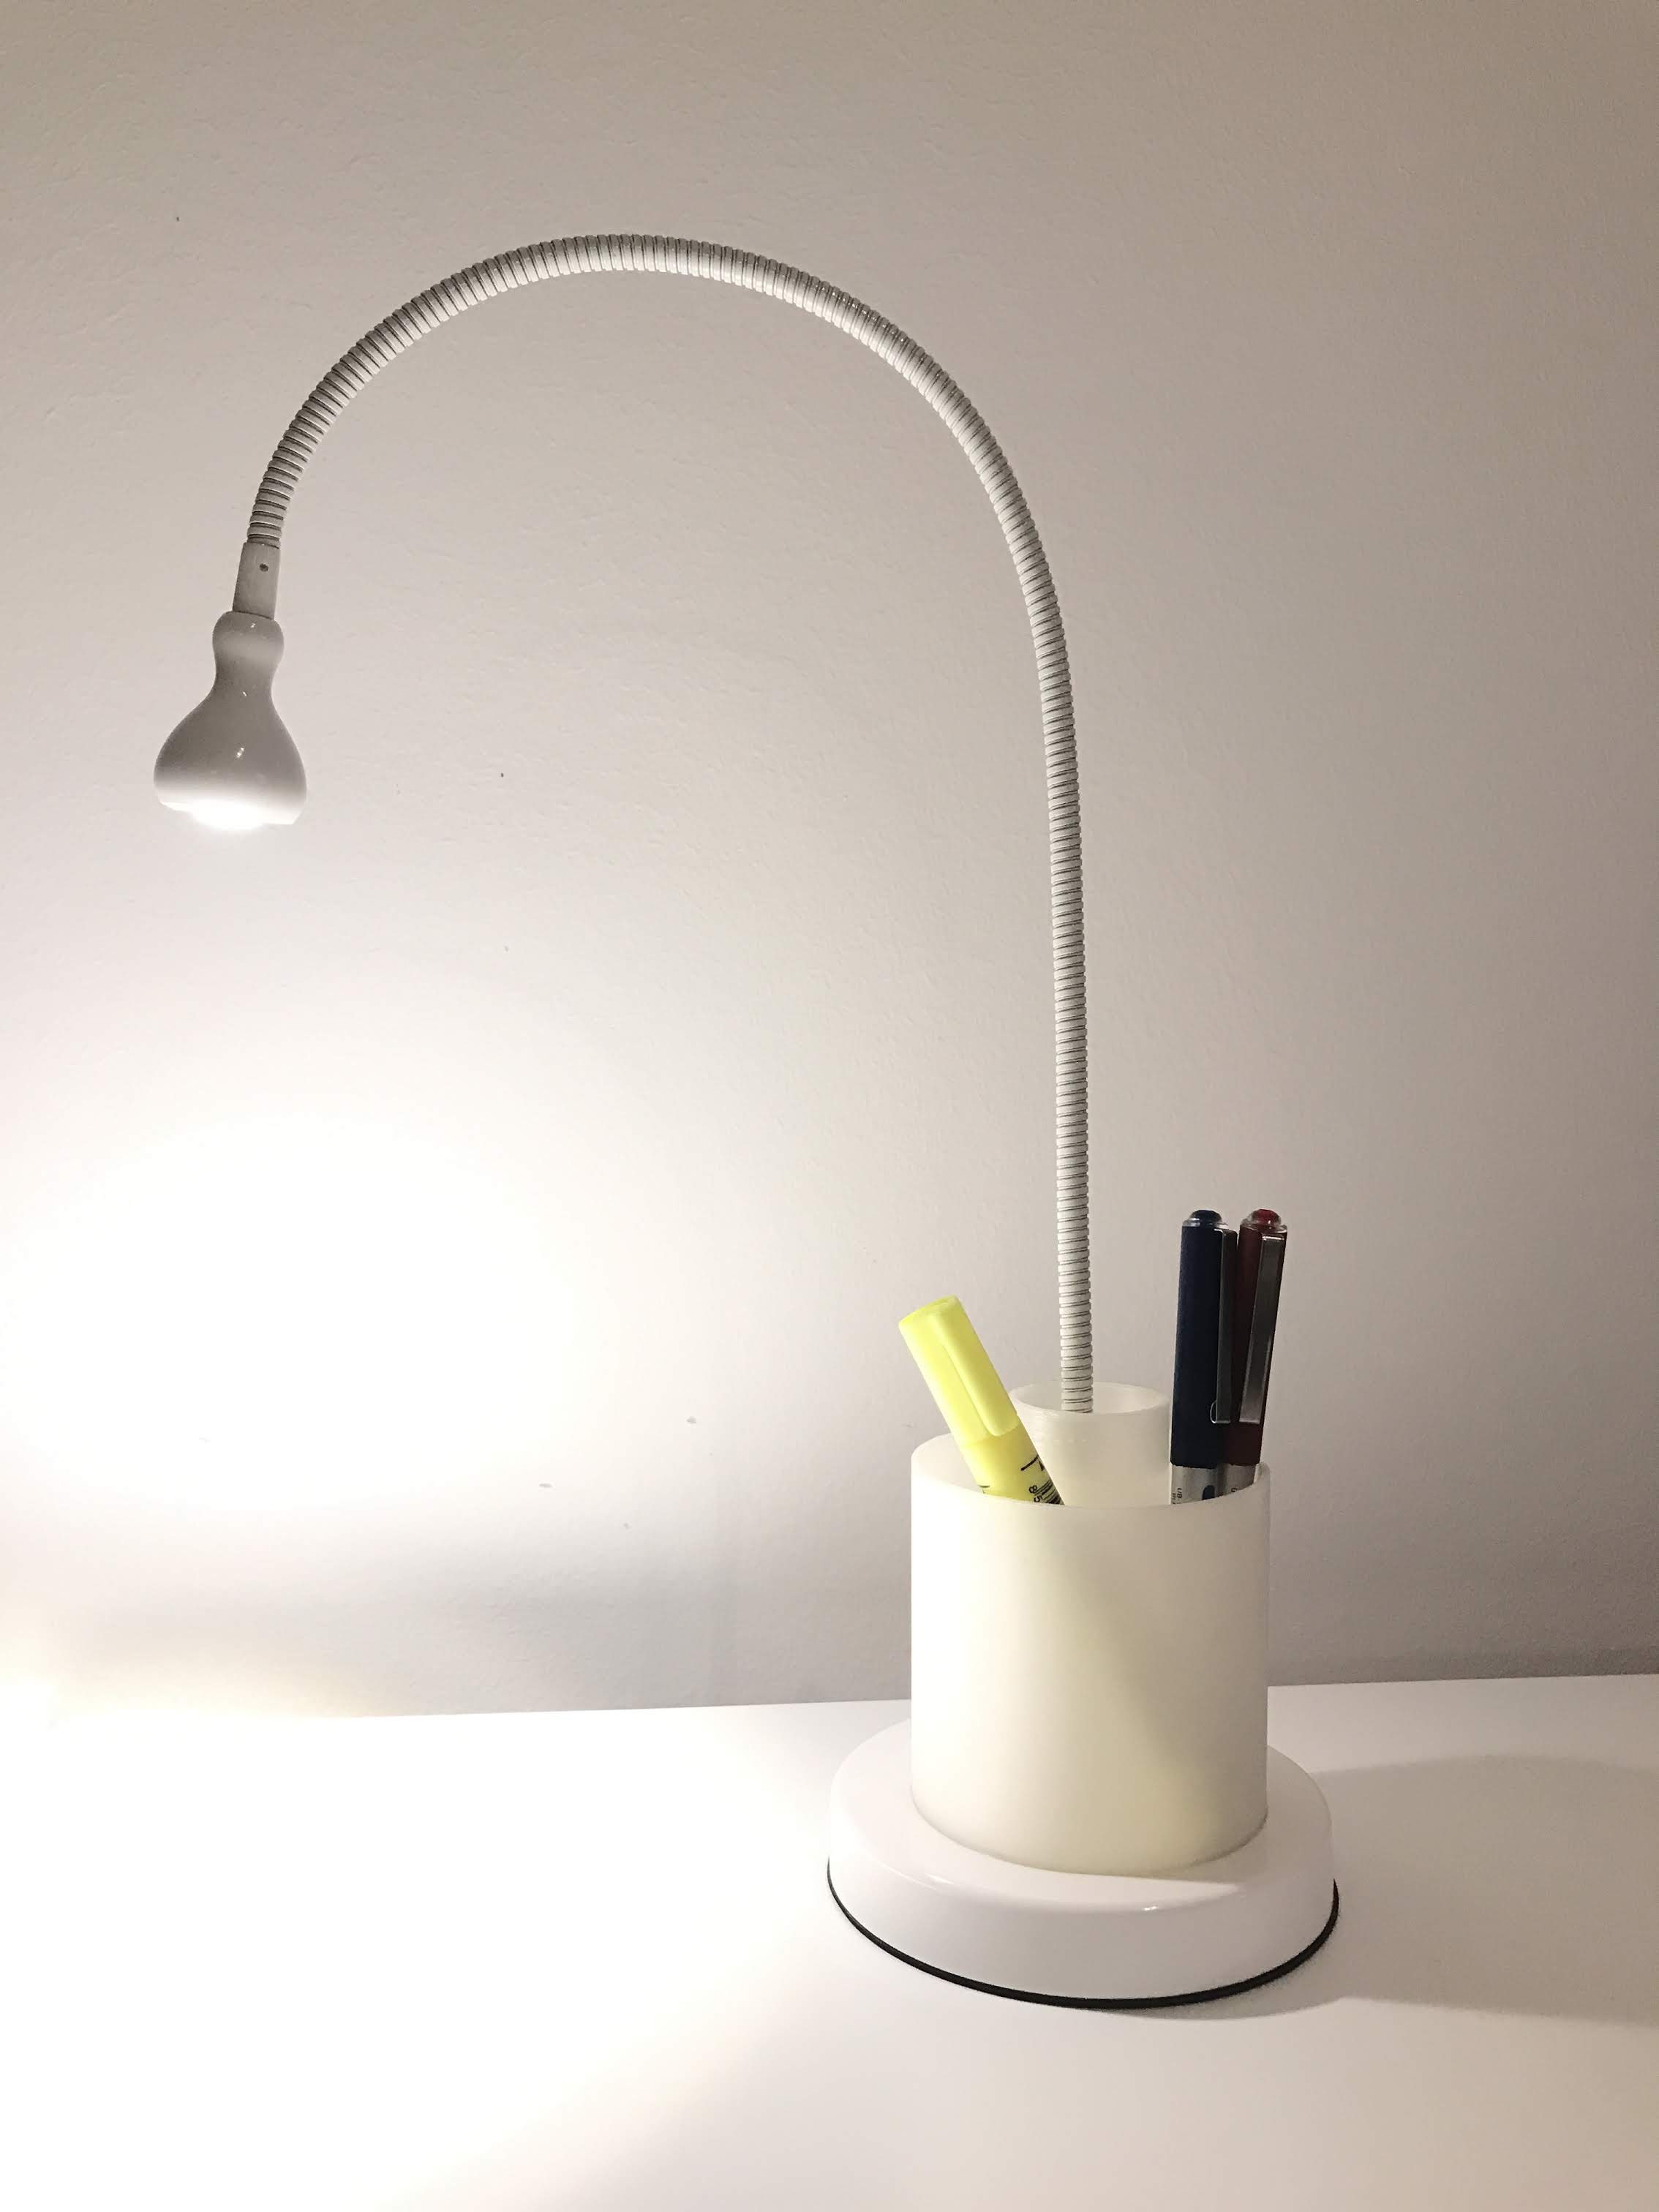 Pencil holder for IKEA Jansjö lamp